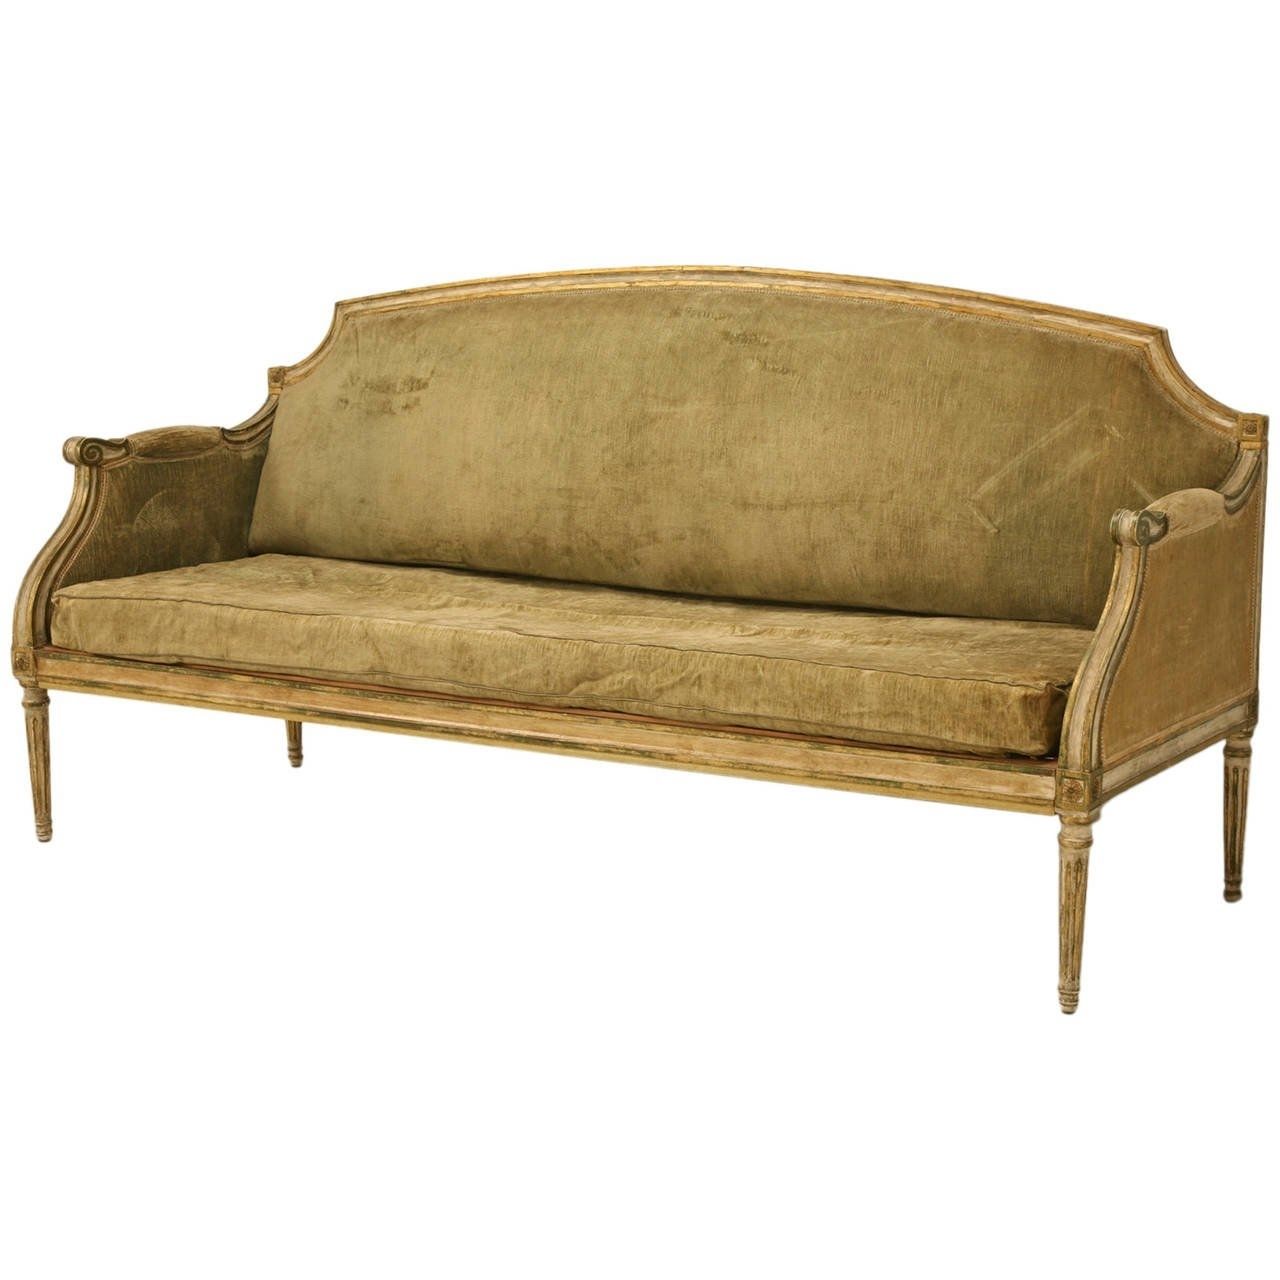 Xvi Style Antique Sofa In Incredible Original Paint At 1stdibs Regarding Antique Sofas (Photo 5 of 10)